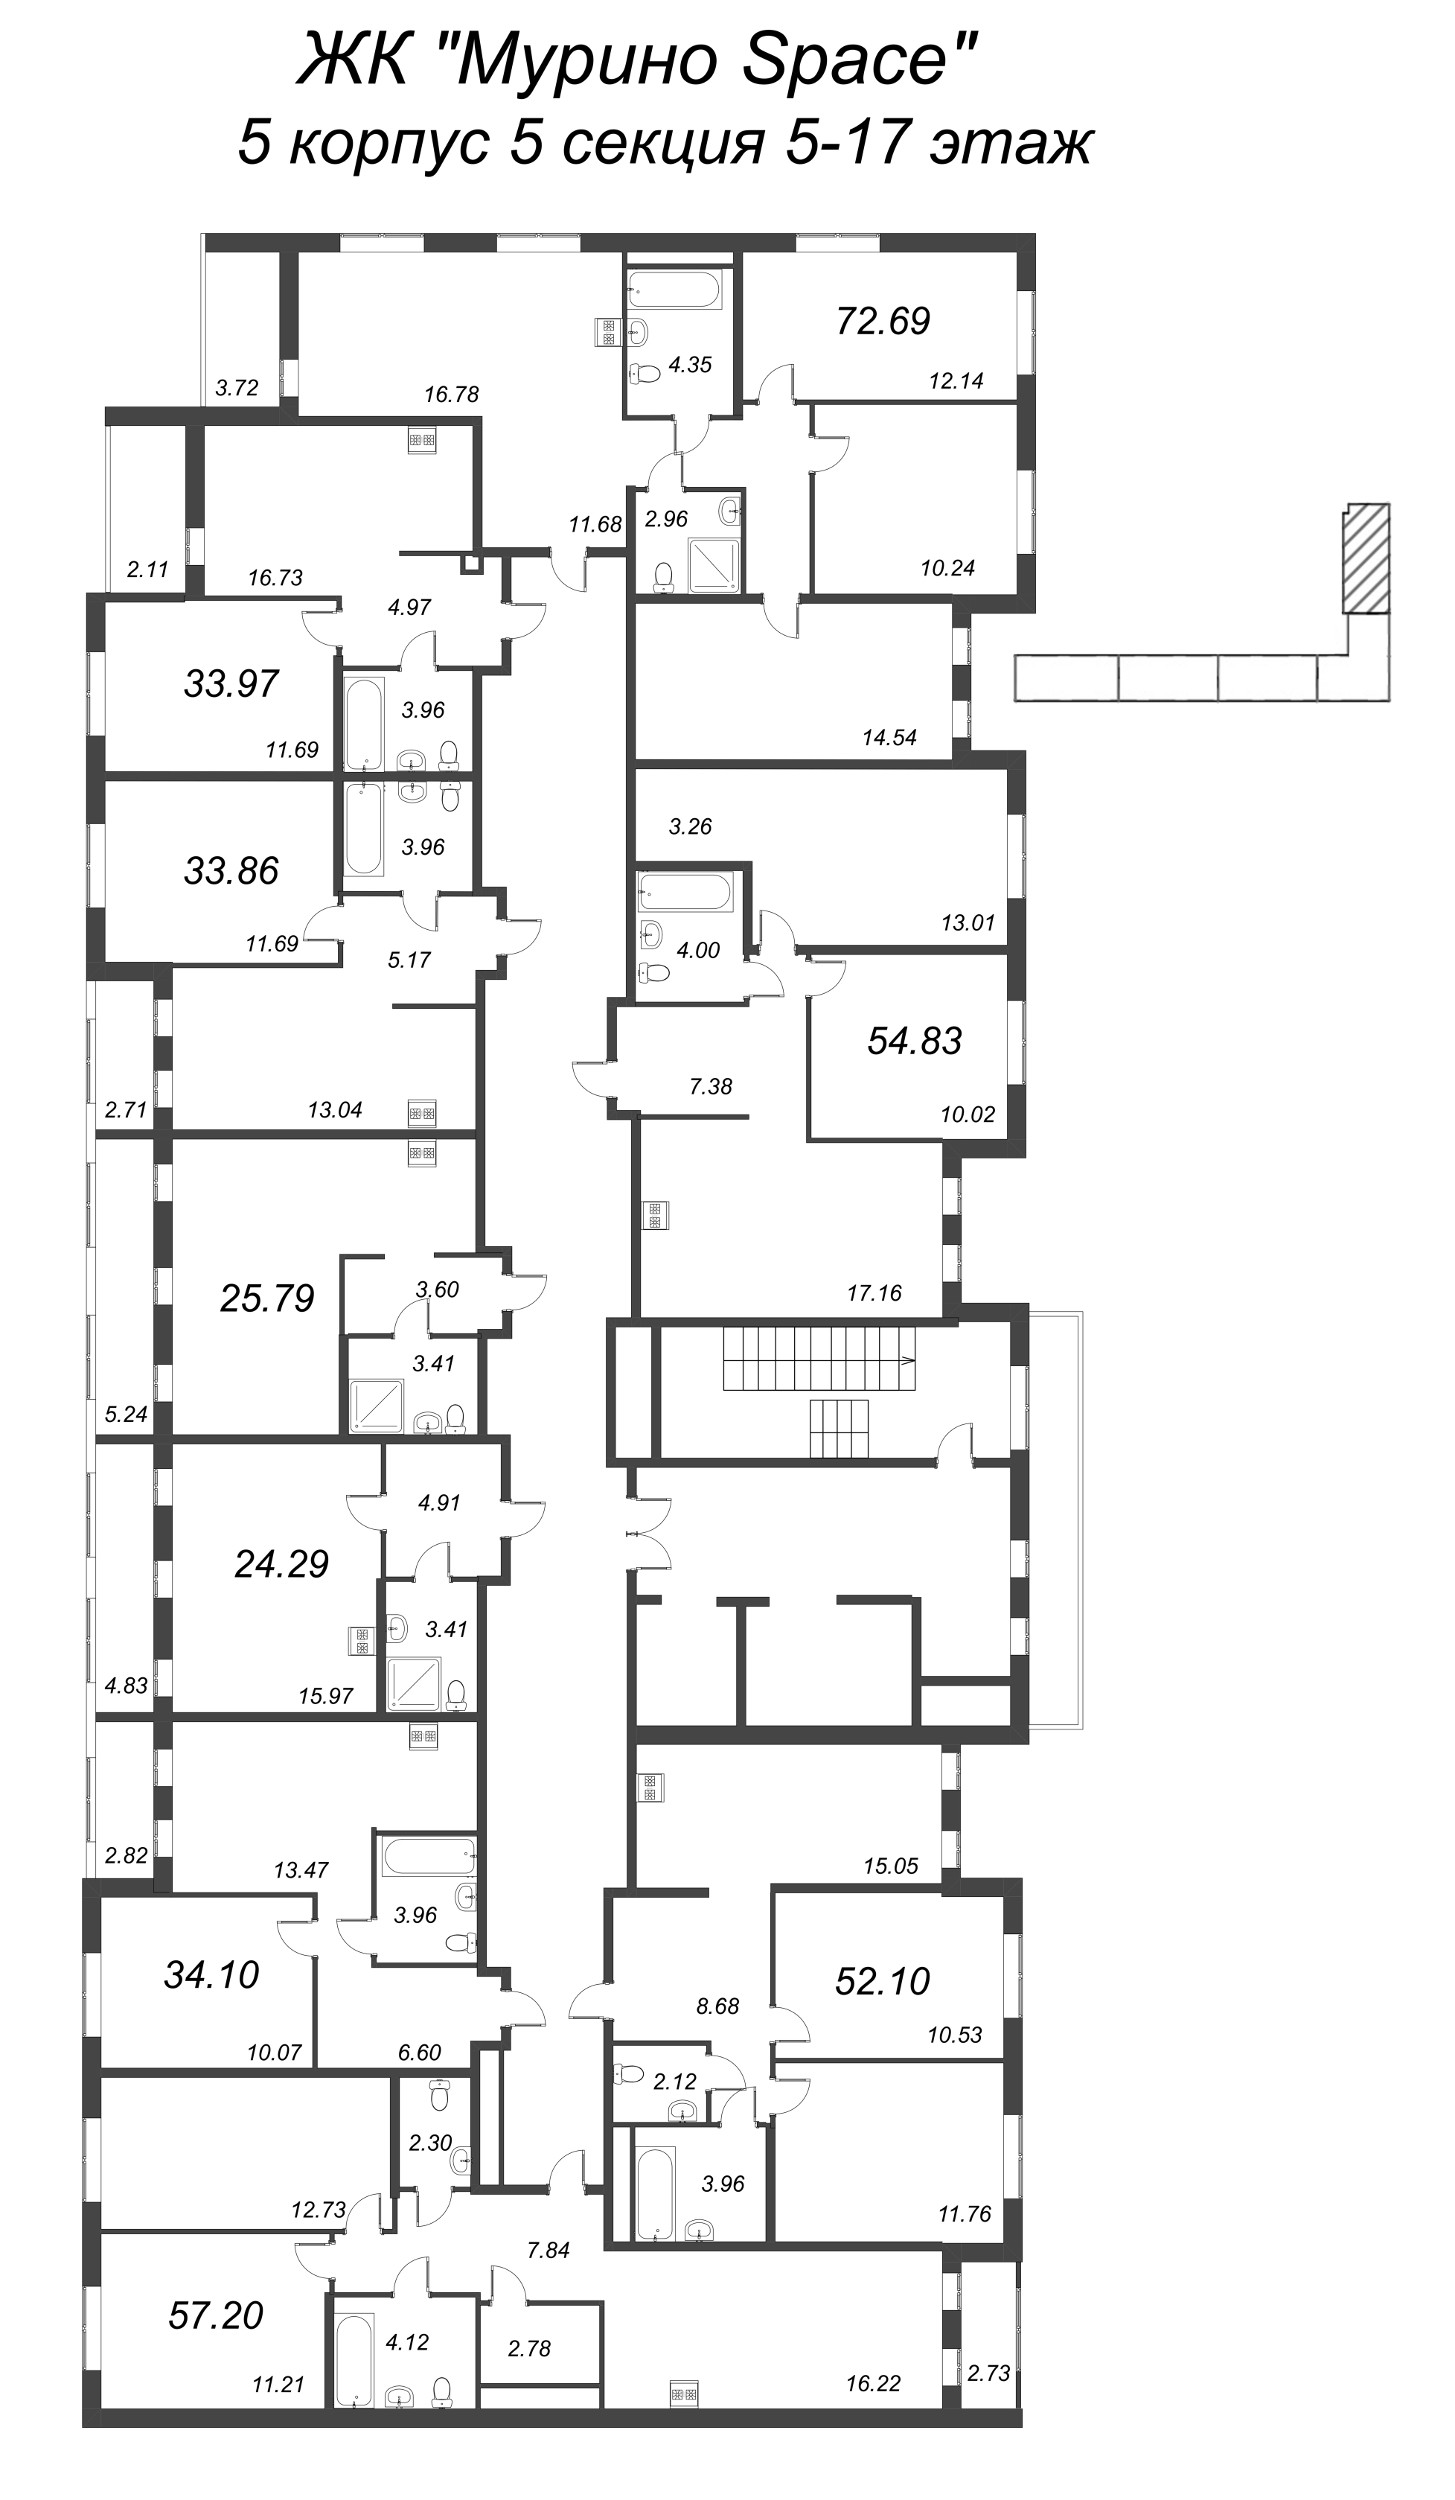 4-комнатная (Евро) квартира, 72.69 м² - планировка этажа